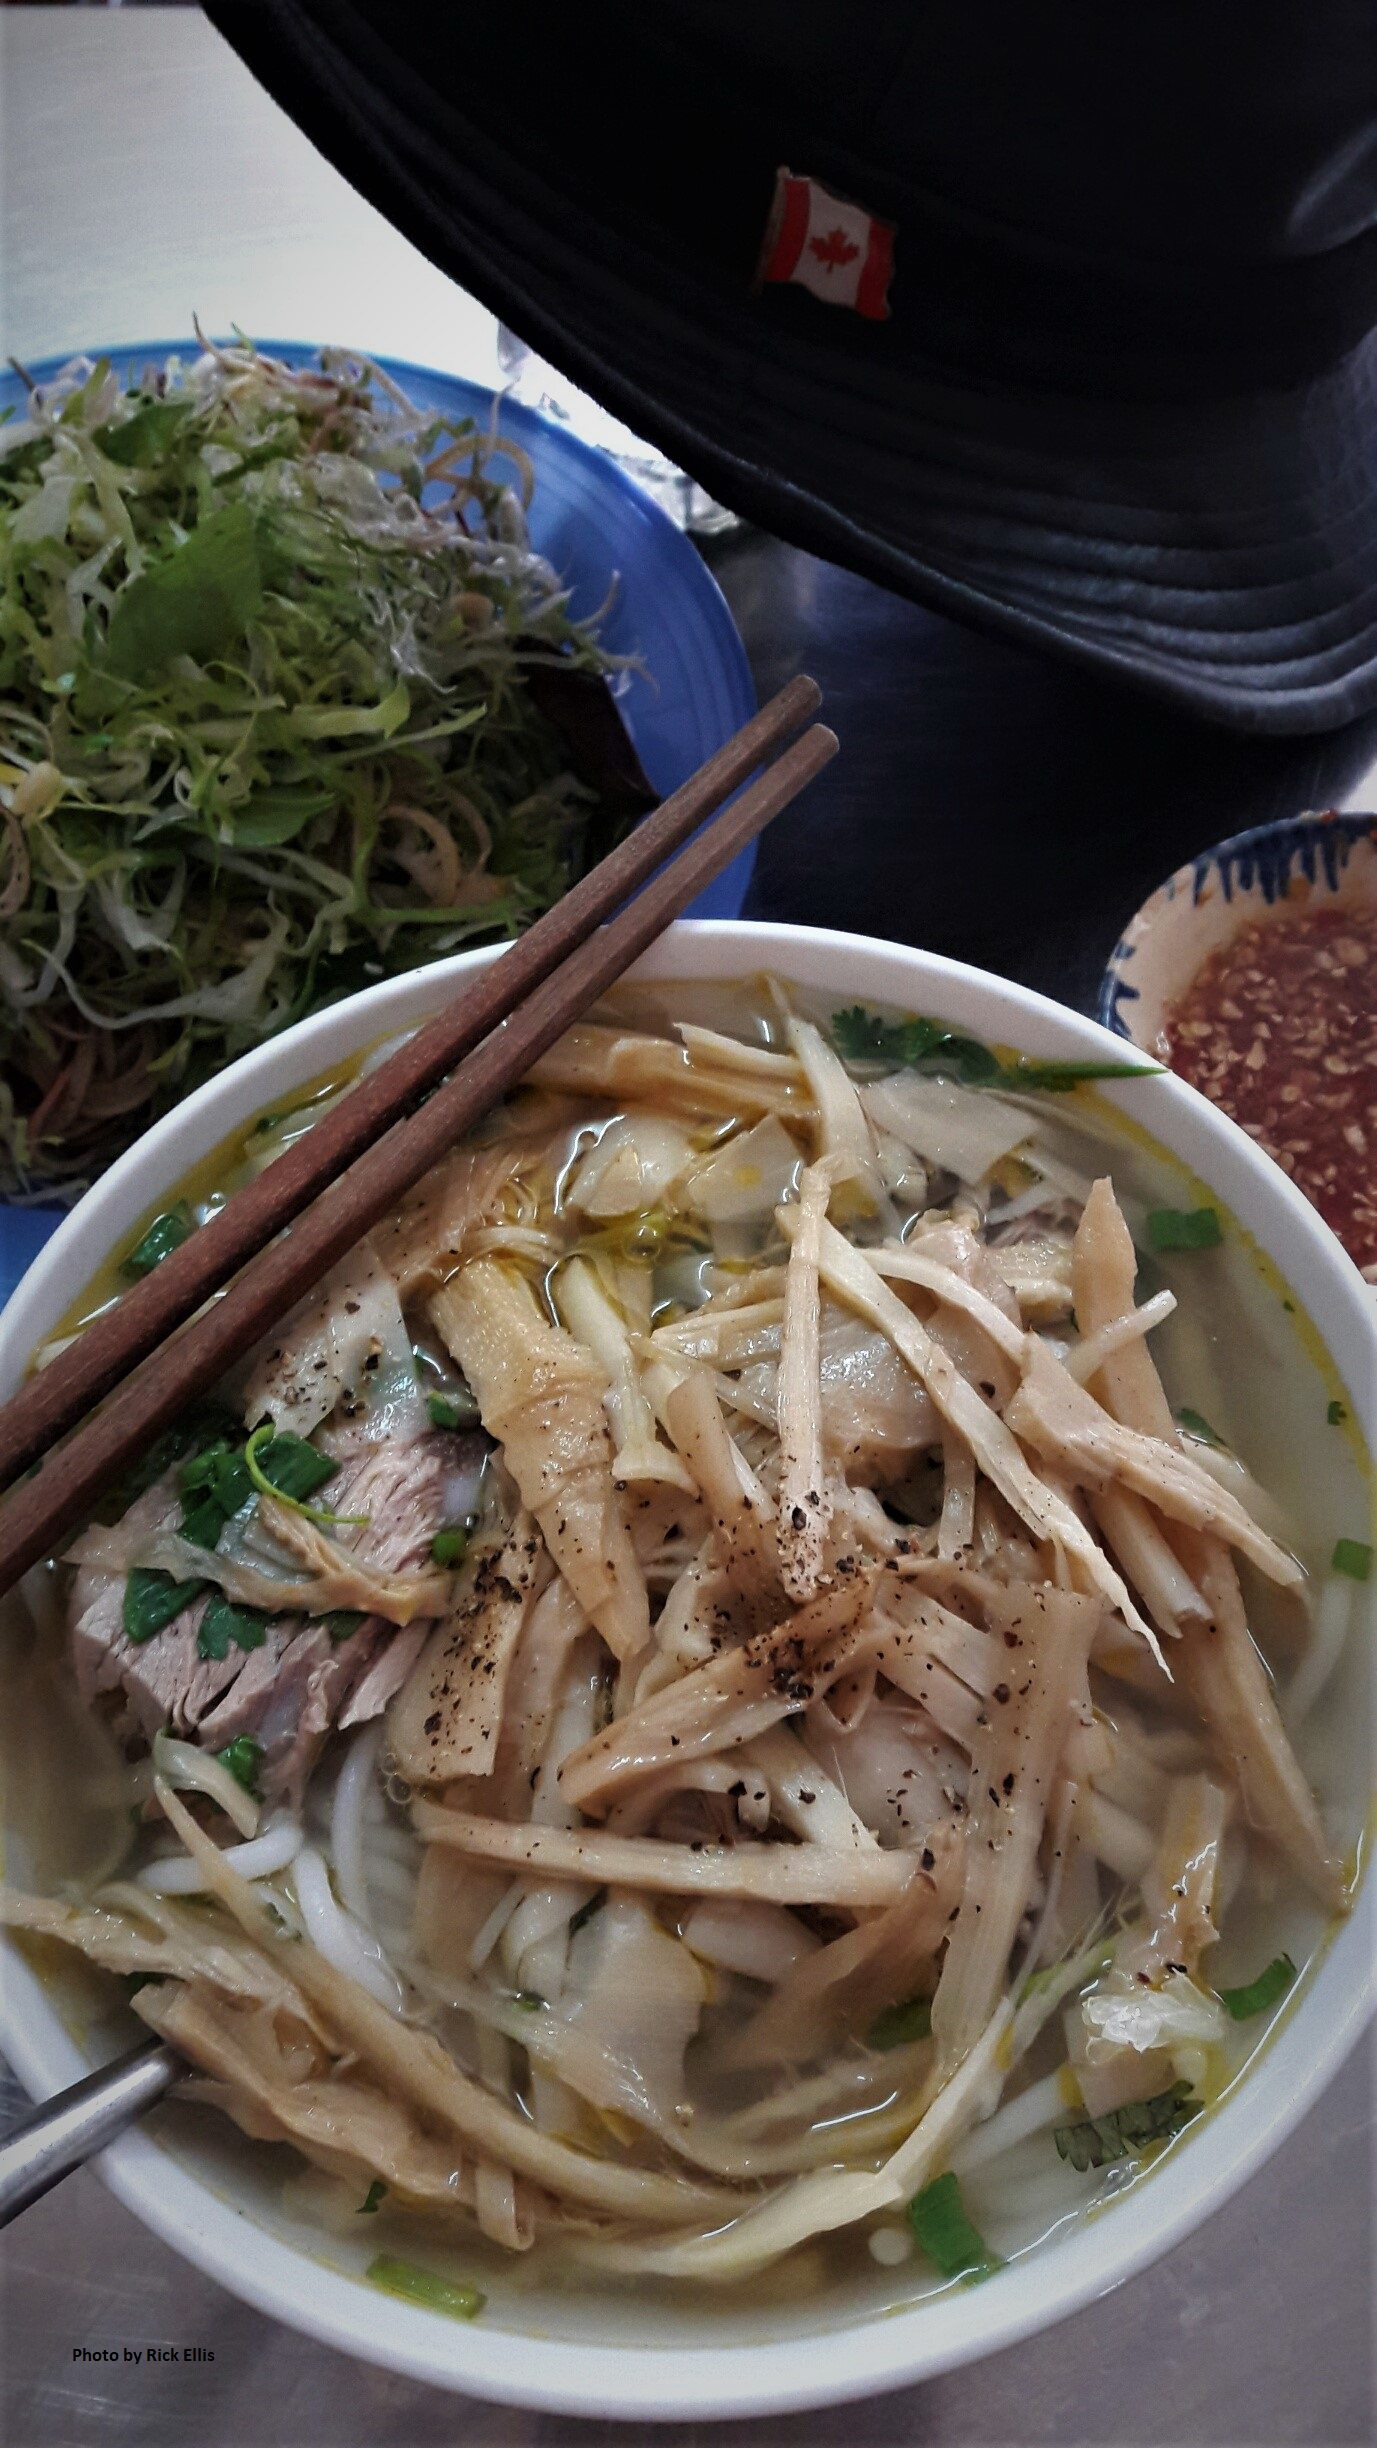 Bun mang vit – duck noodle soup with bamboo shoots